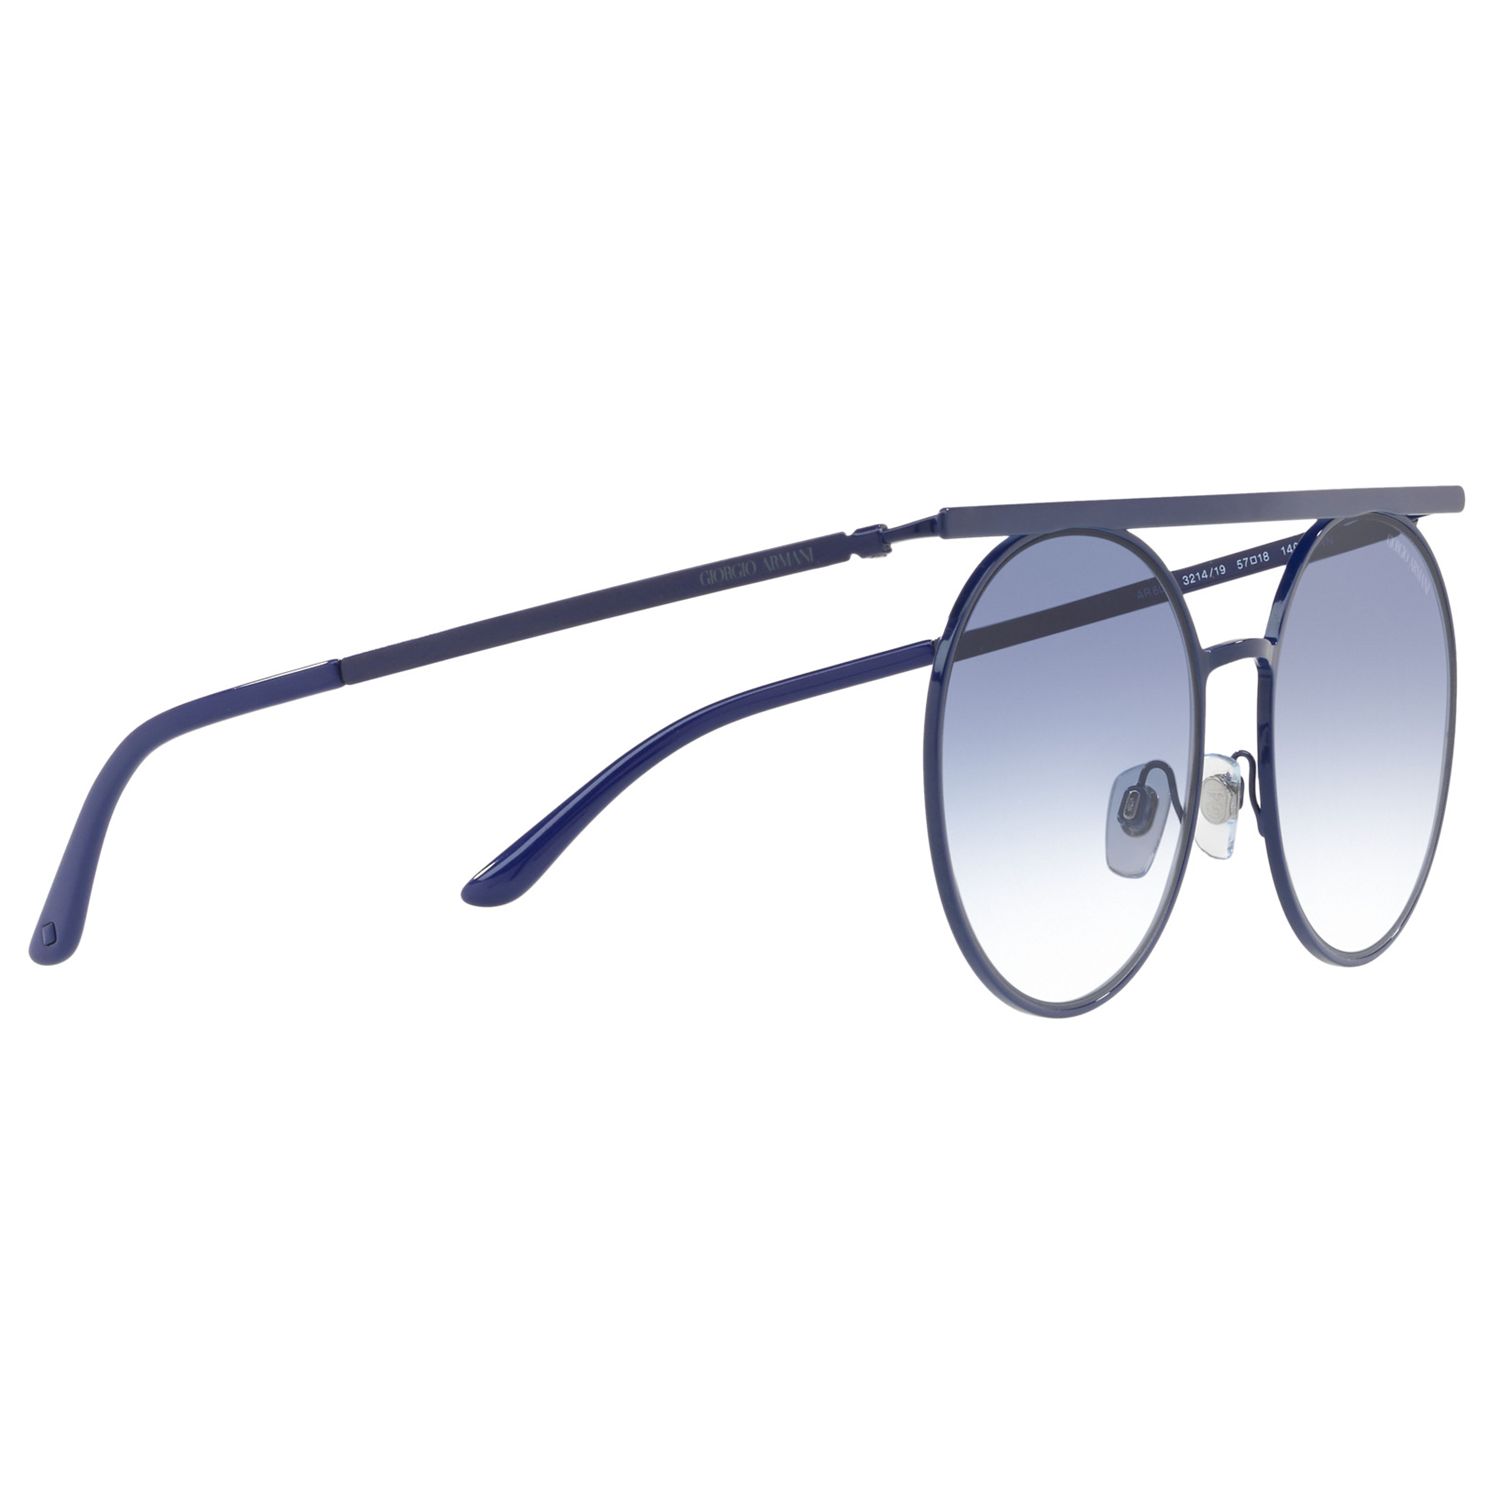 Giorgio Armani AR6069 Round Sunglasses, Navy/Blue Gradient at John ...